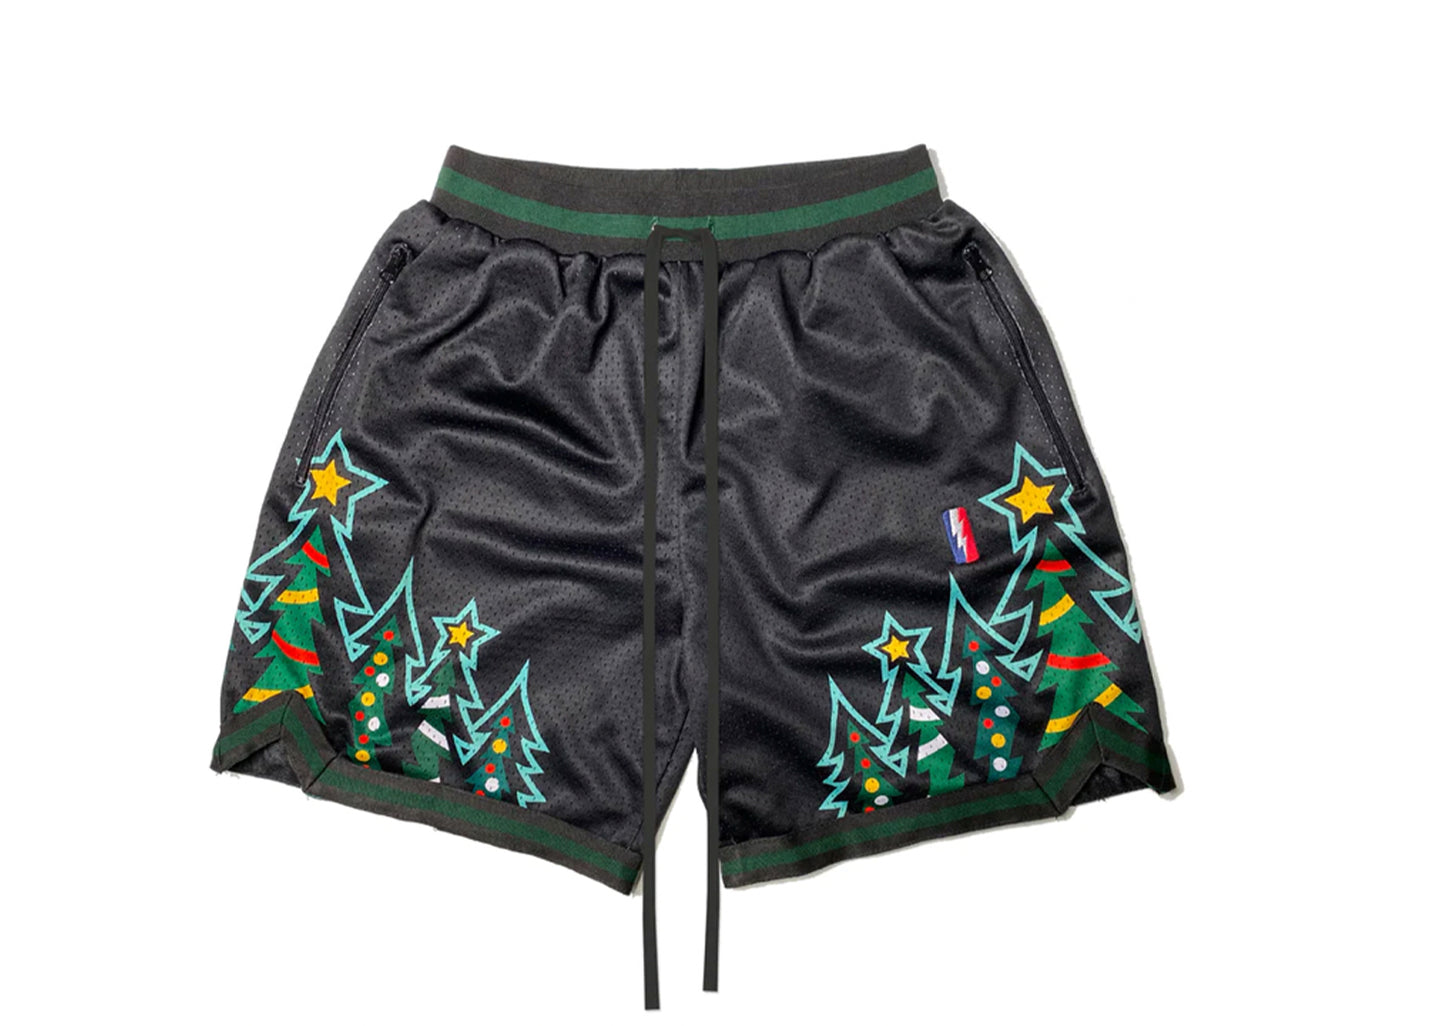 Collect & Select Swingman Shorts (Christmas QS)